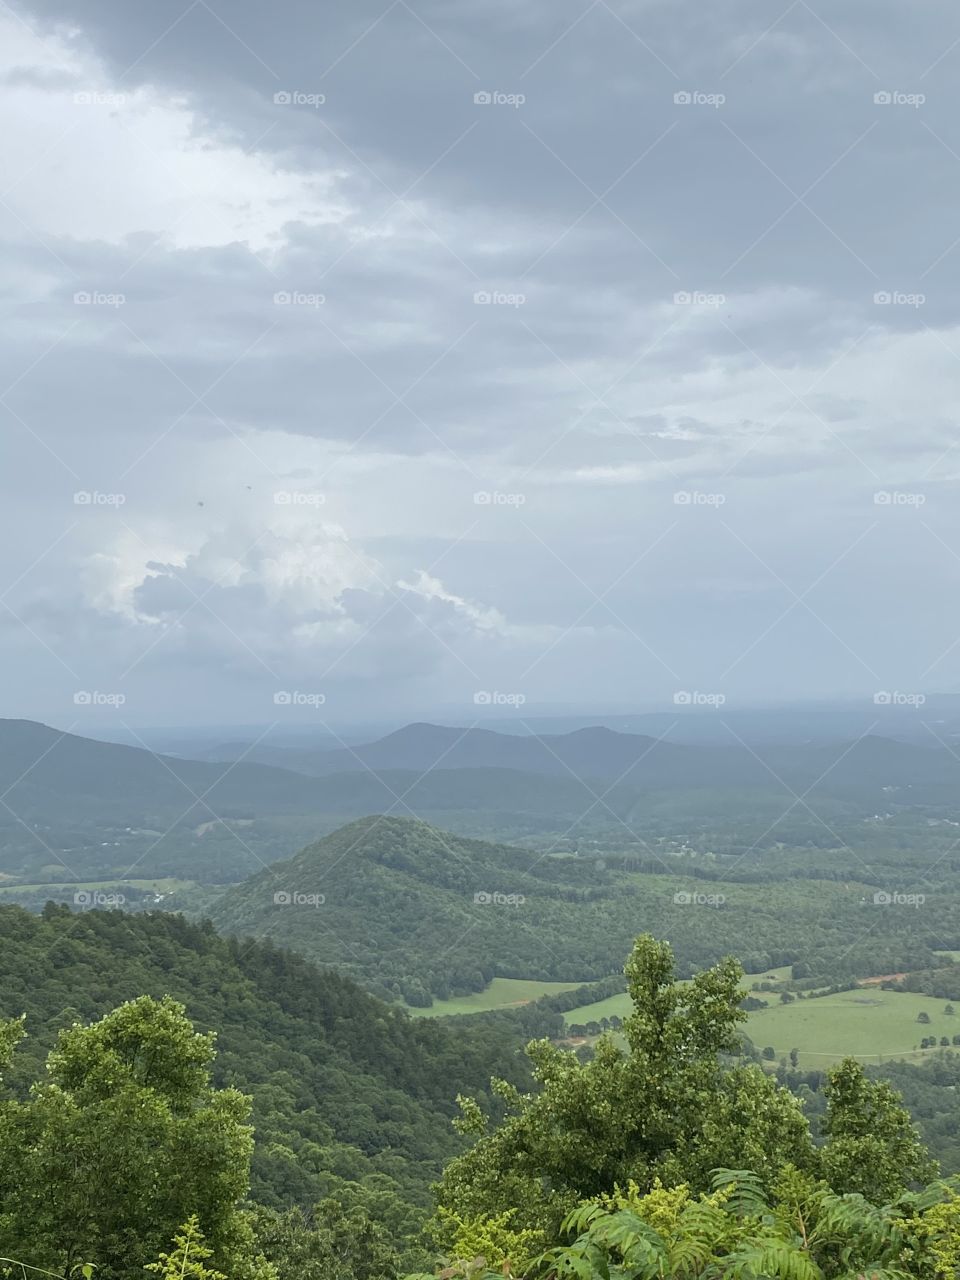 Road Trip Series: North Carolina Mountains